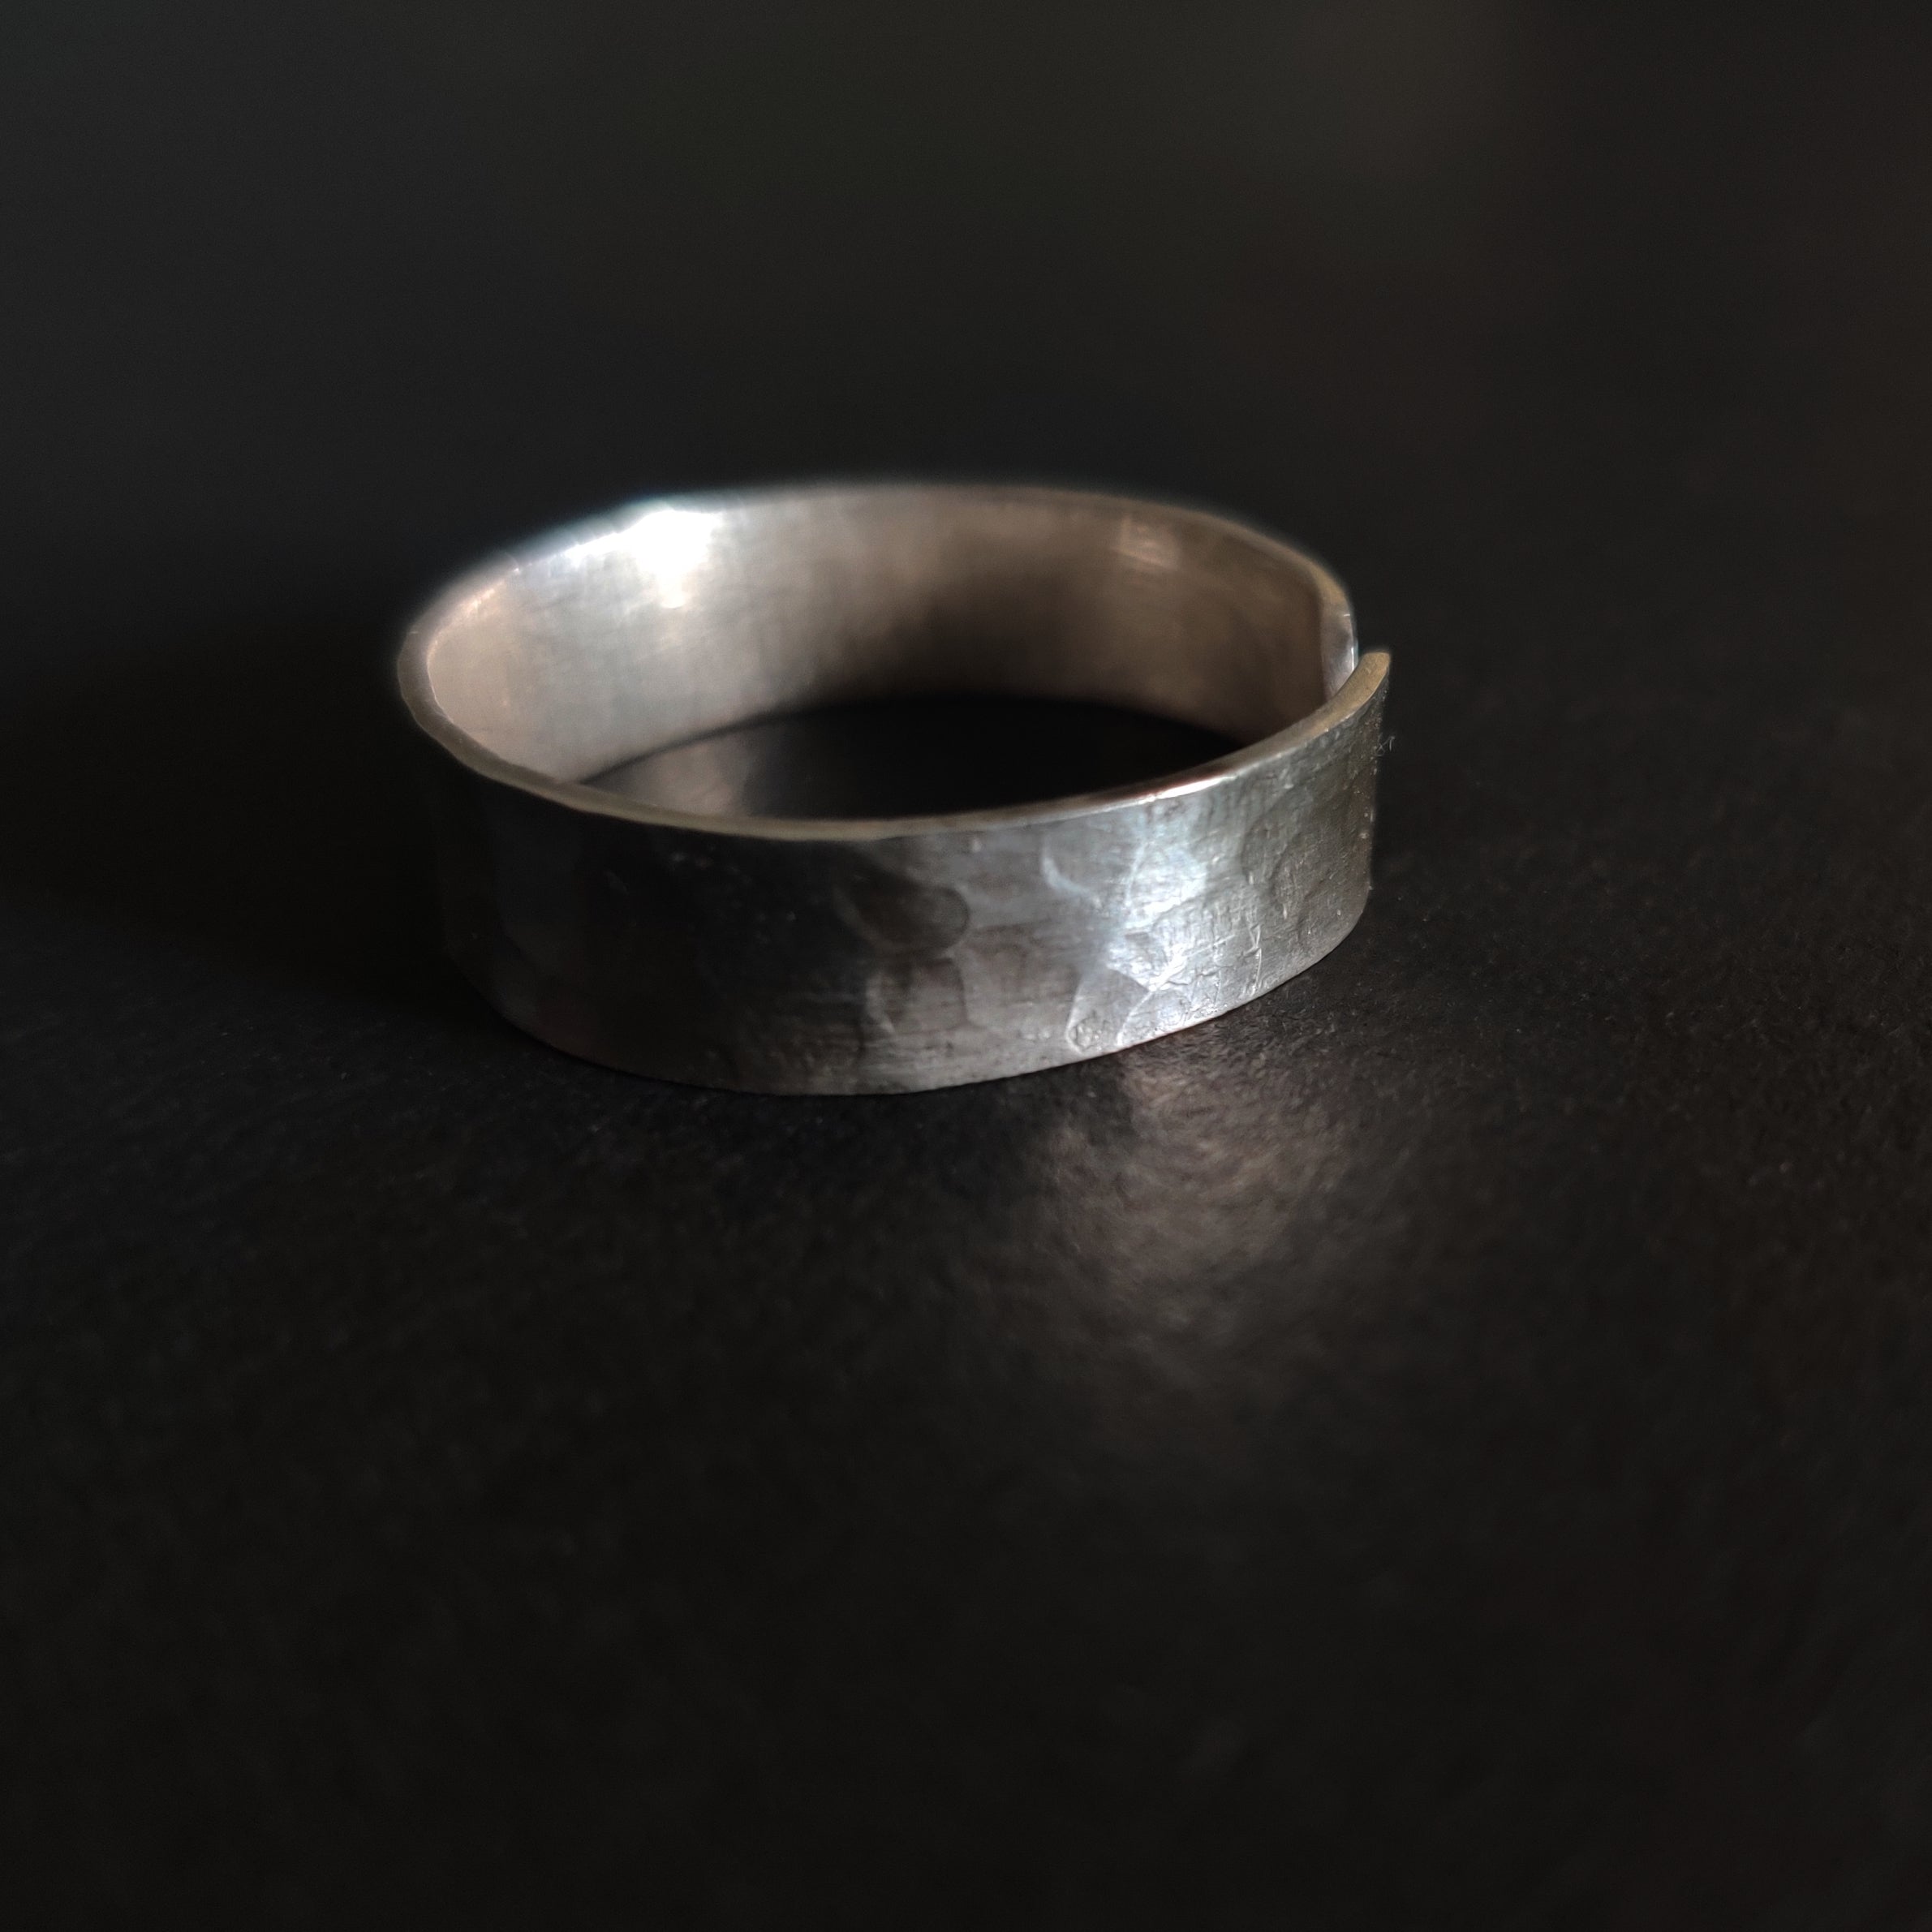 Cheap Gemstone Silver Rings for Men, Malachite and Zircon Stone Fine Jewelry  Men's Ring Fashion Accessory, Best Gift for Friend | Joom